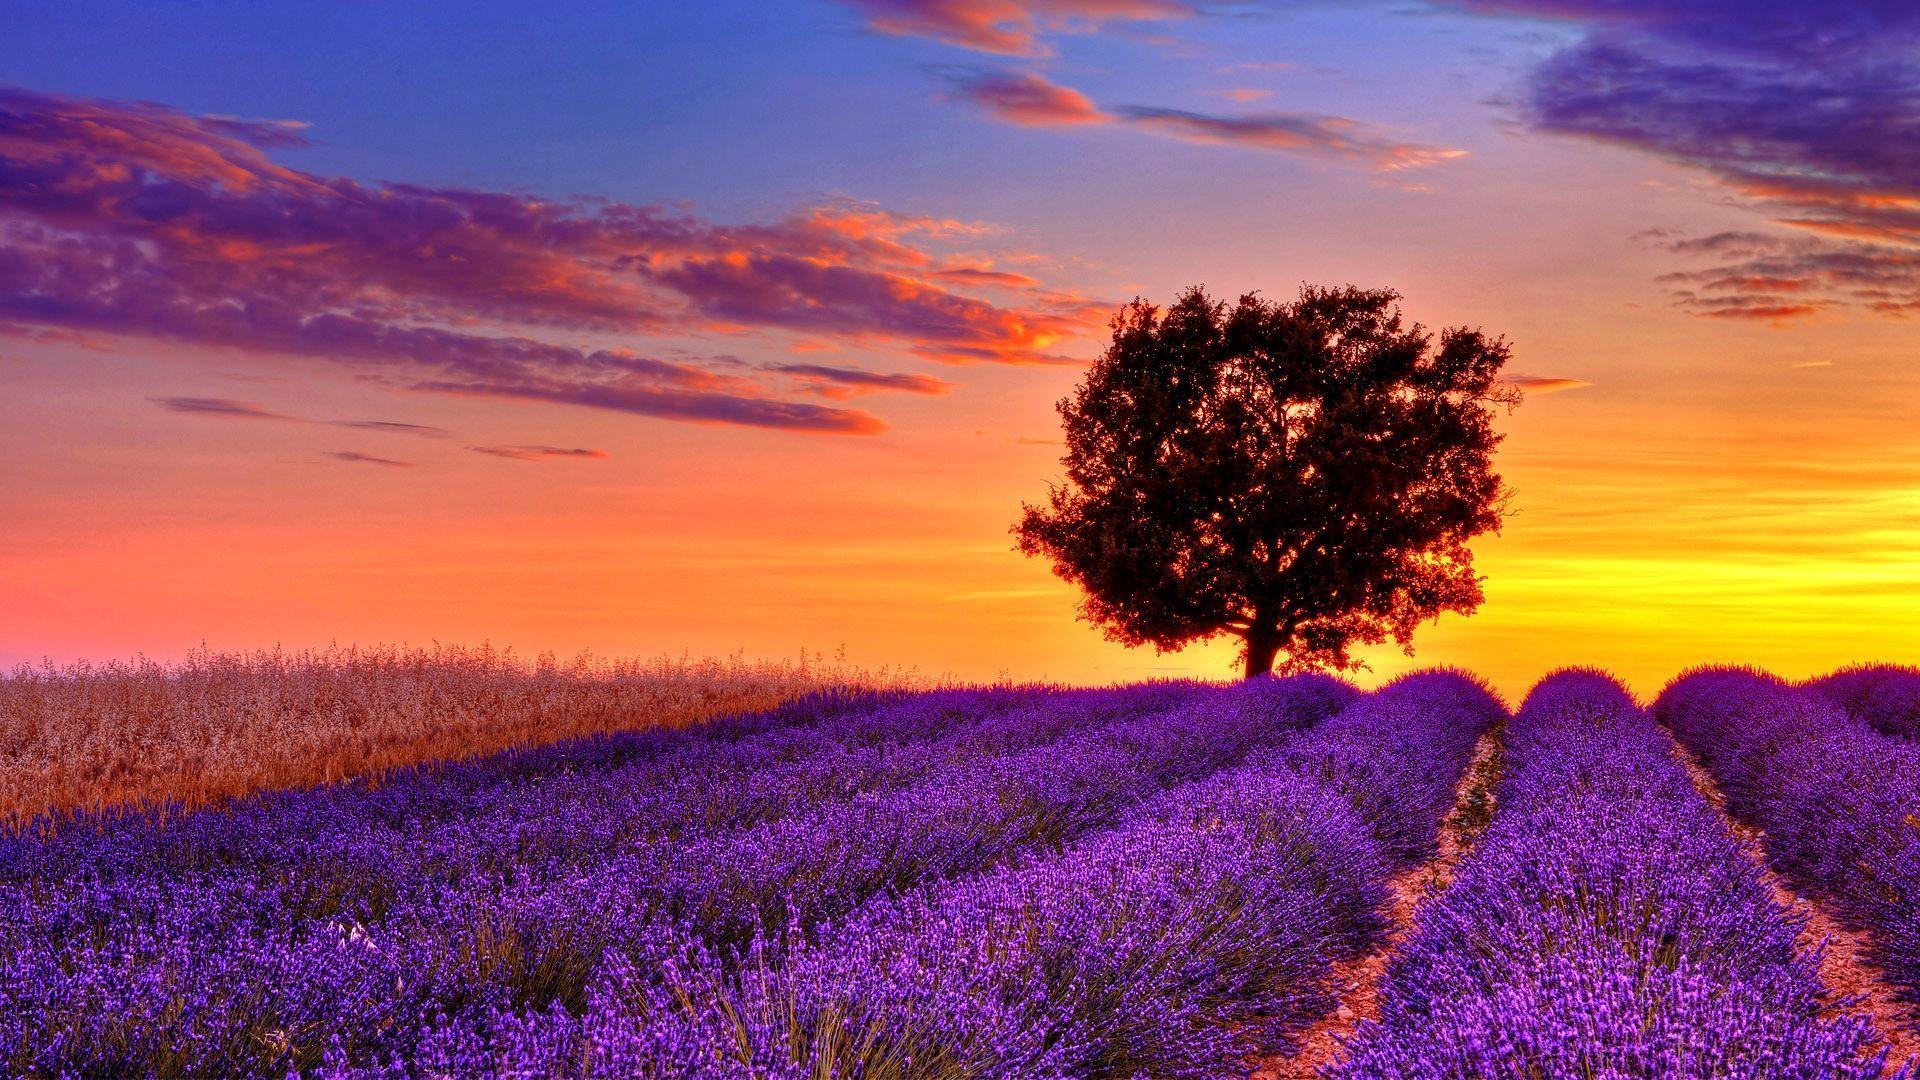 Wallpaper lavender field sky mountain Provence France Europe 4k  Nature 16530